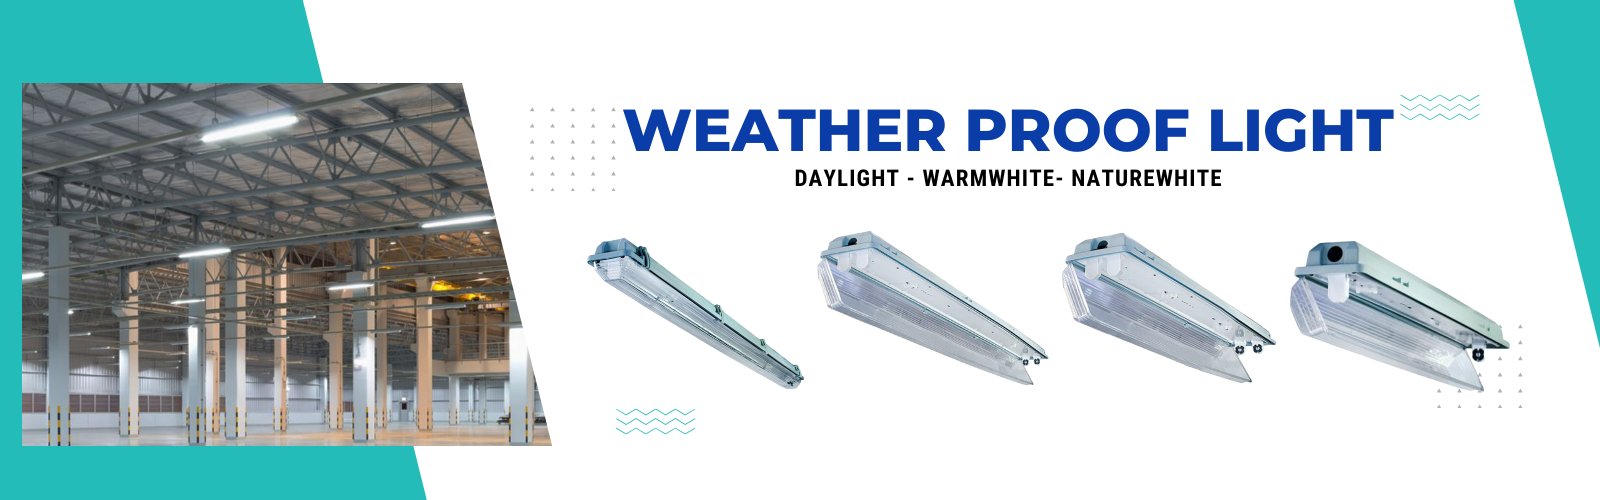 LED Weatherproof Fixture Ecoshift Shopify